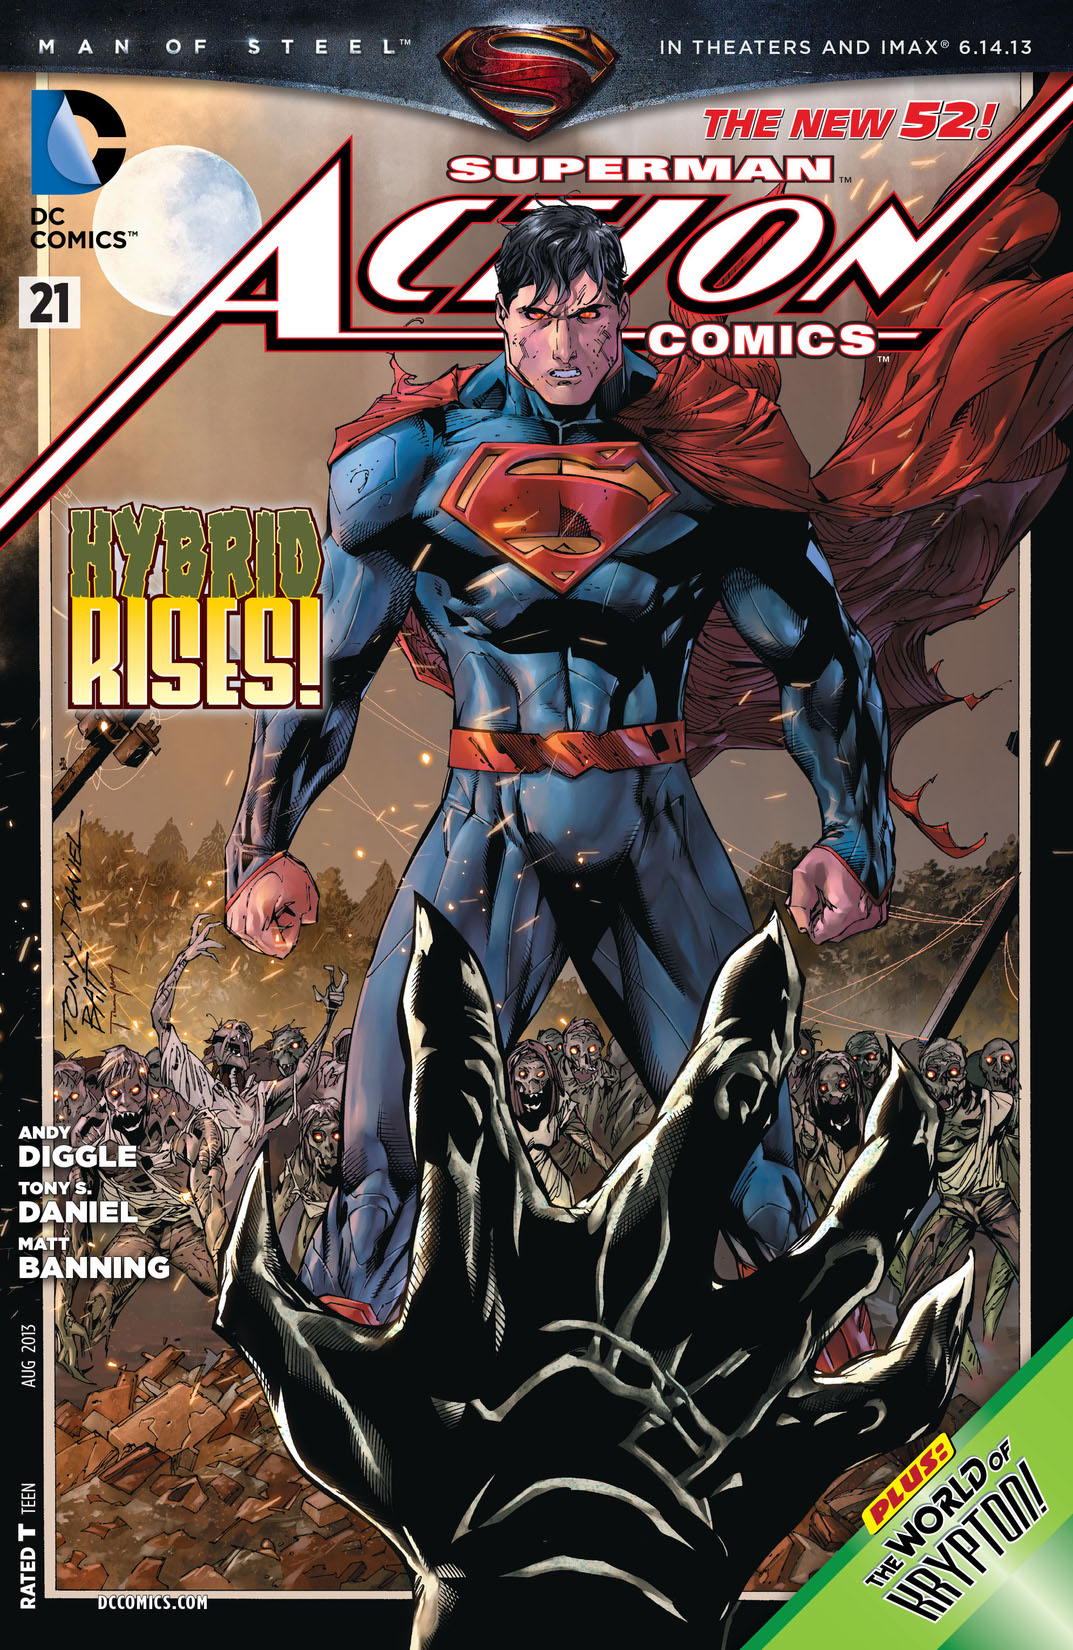 Action Comics (2011-) #21 preview images